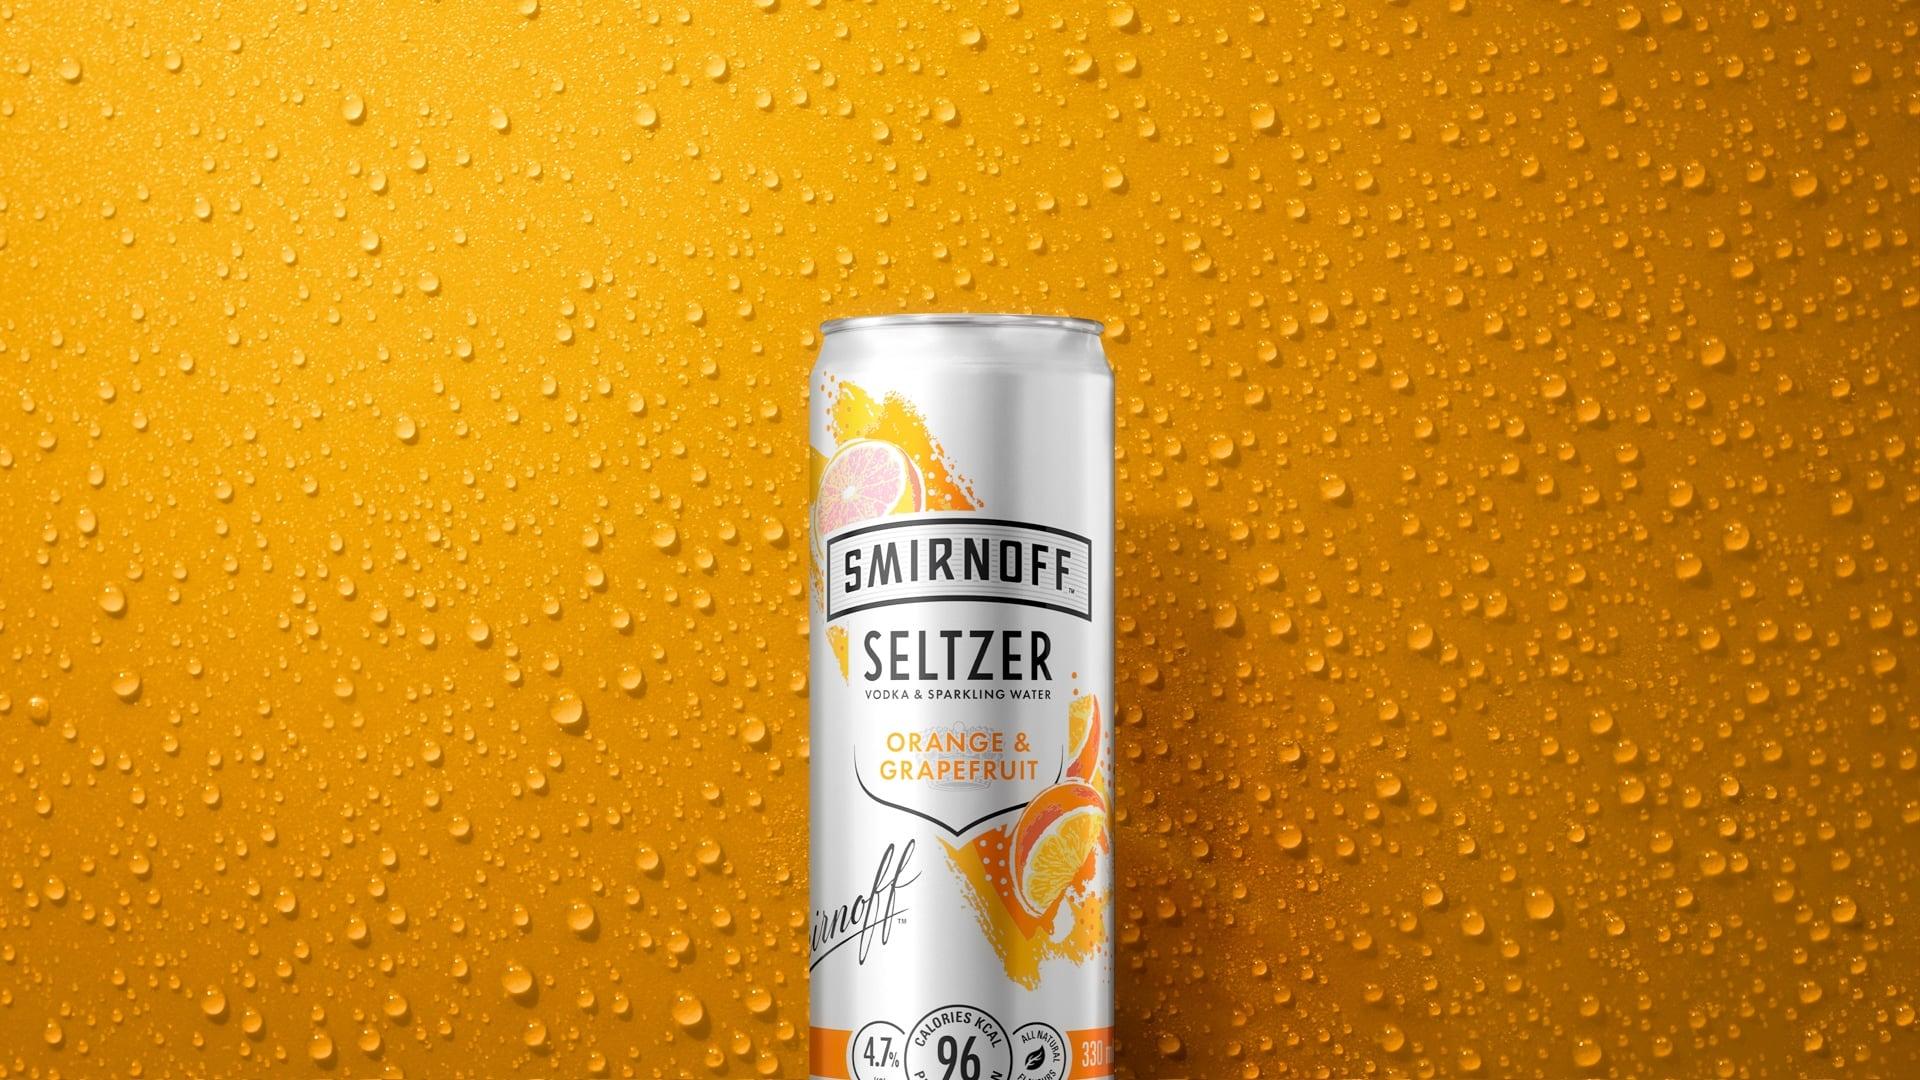 Orange Grapefruit Seltzer on a textured orange background